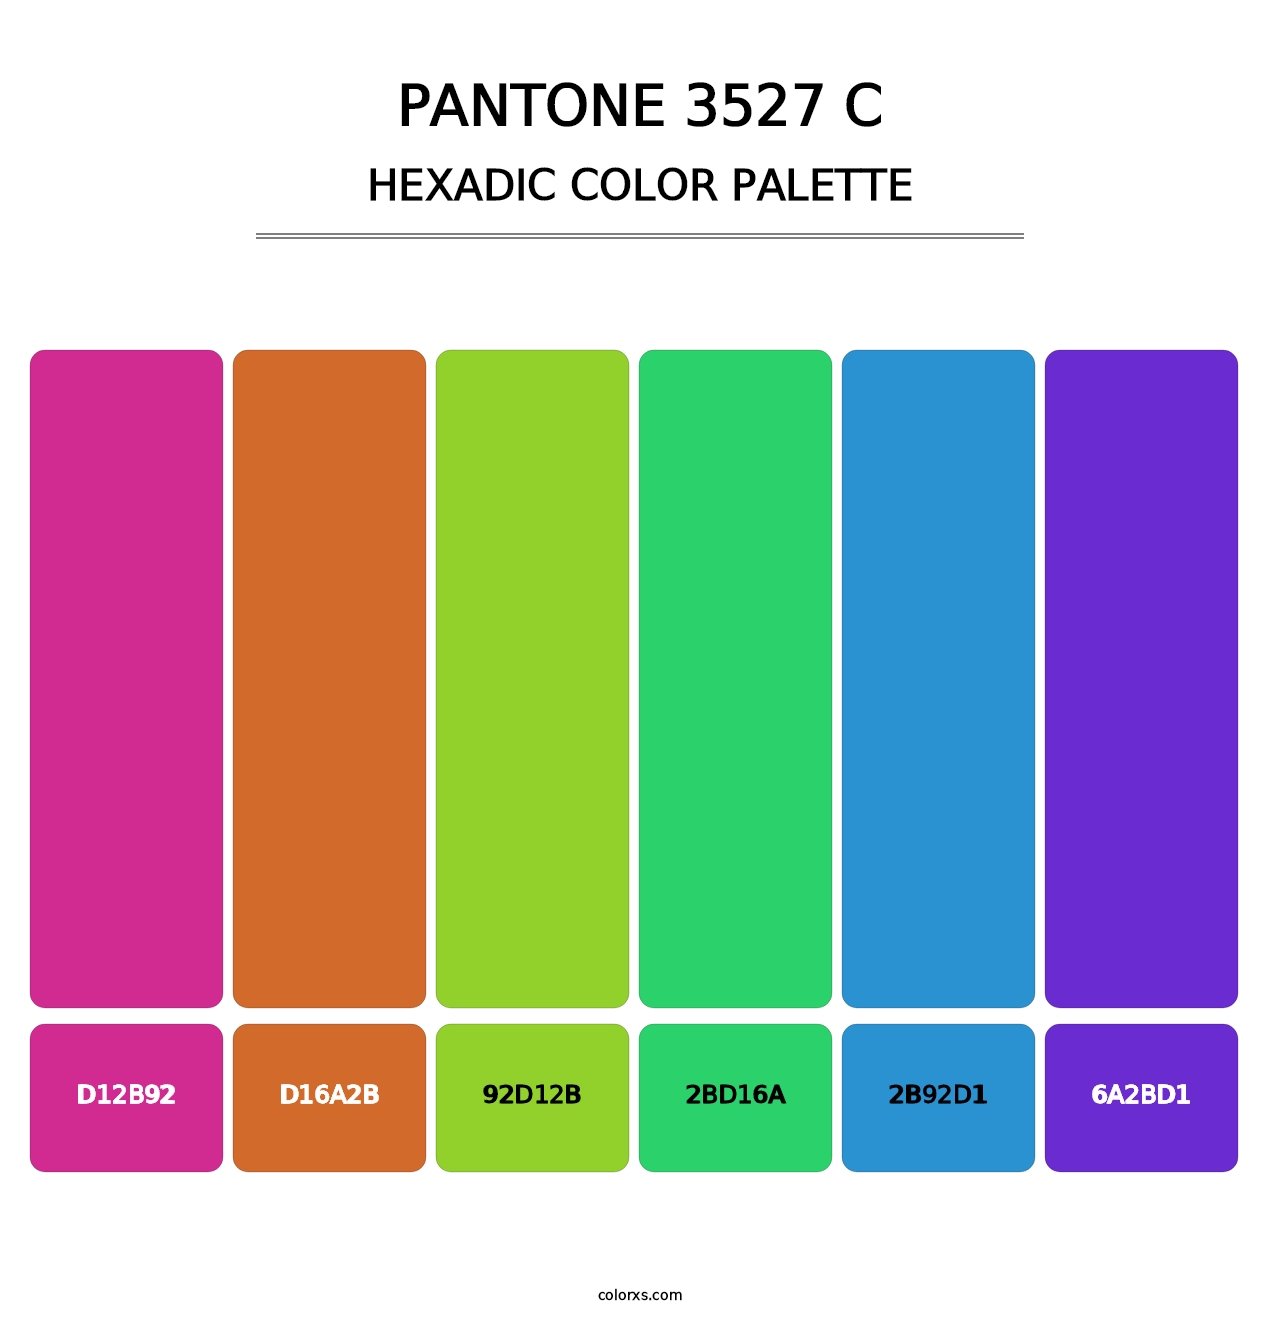 PANTONE 3527 C - Hexadic Color Palette